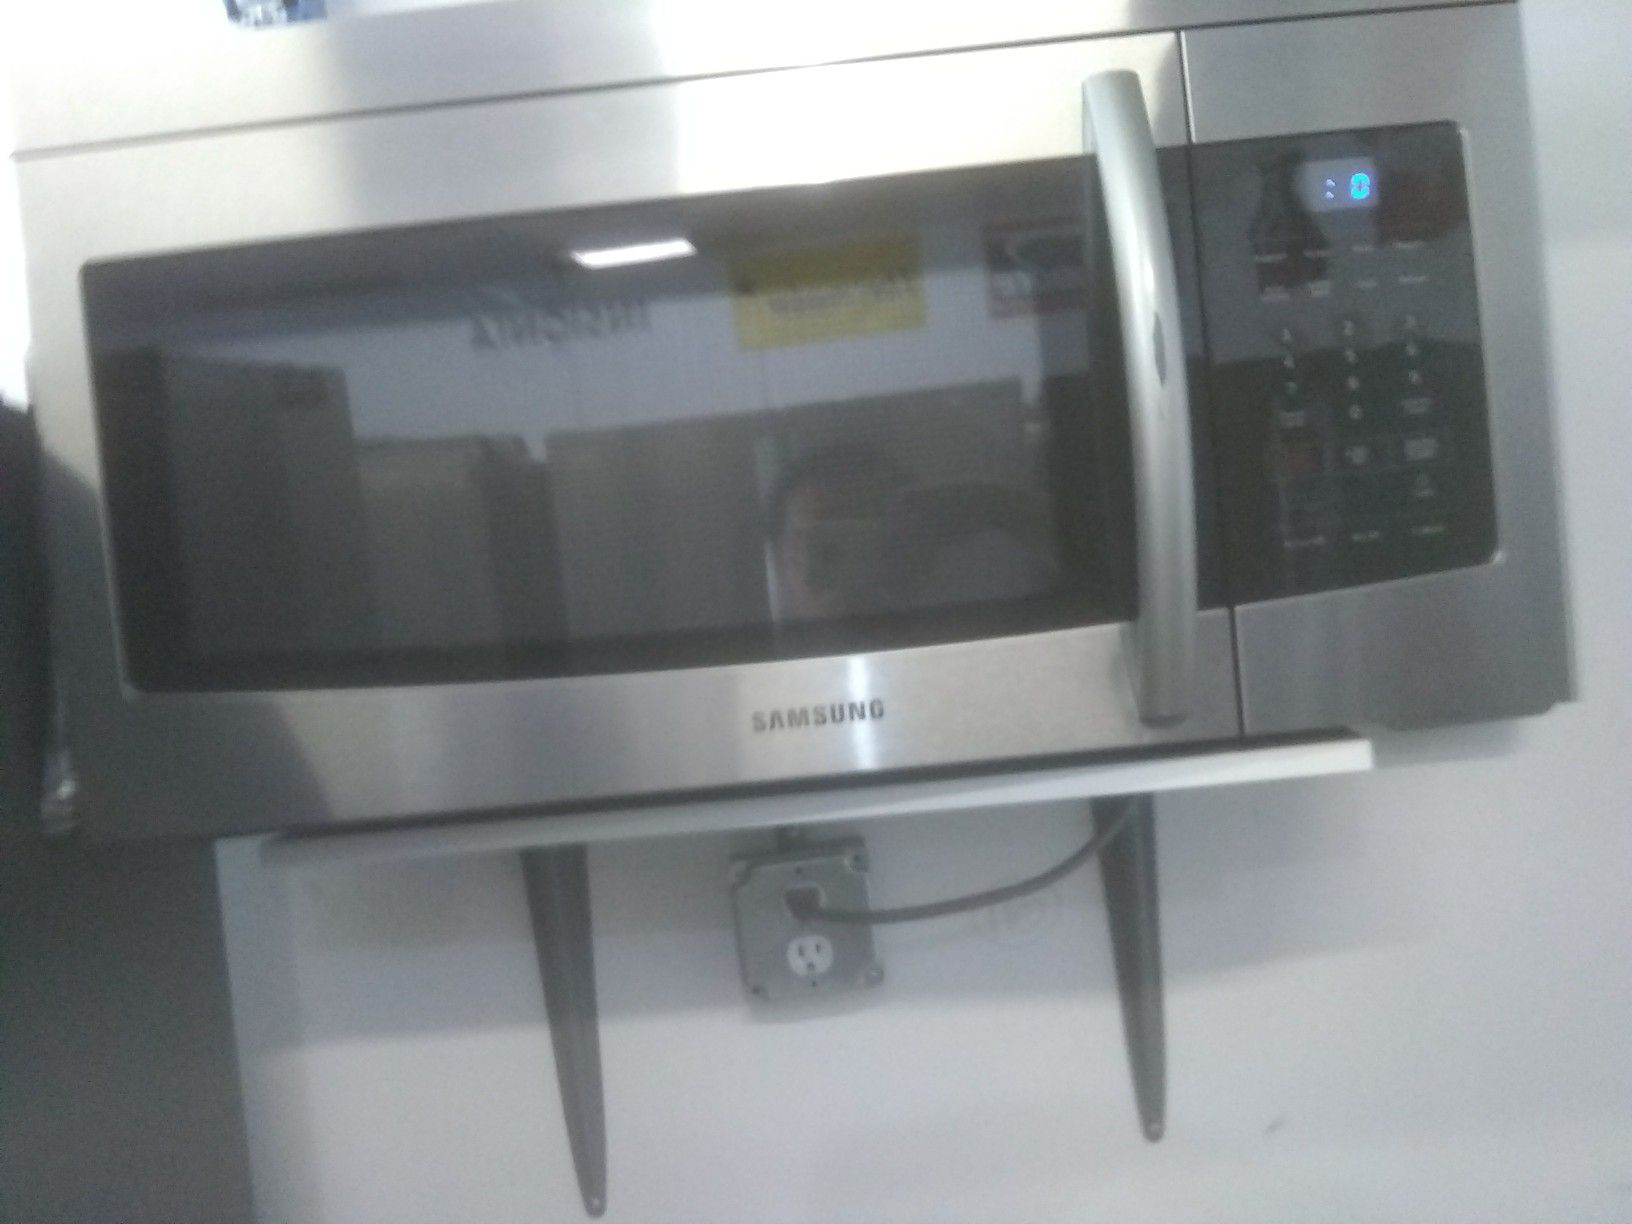 Samsung stainless steel microwave Kitchen appliance